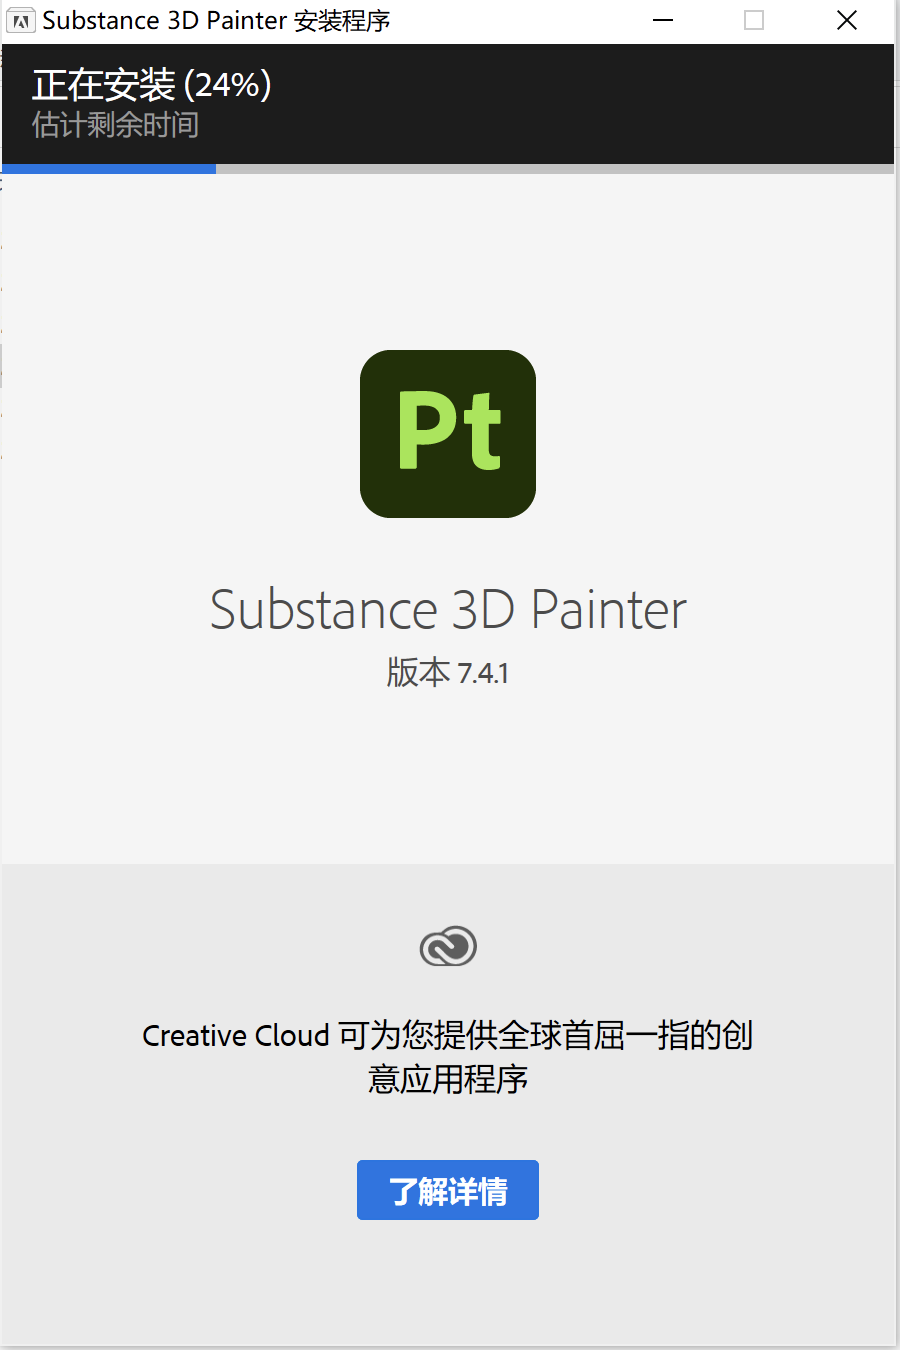 Painter 7.4.1 软件介绍及安装-5